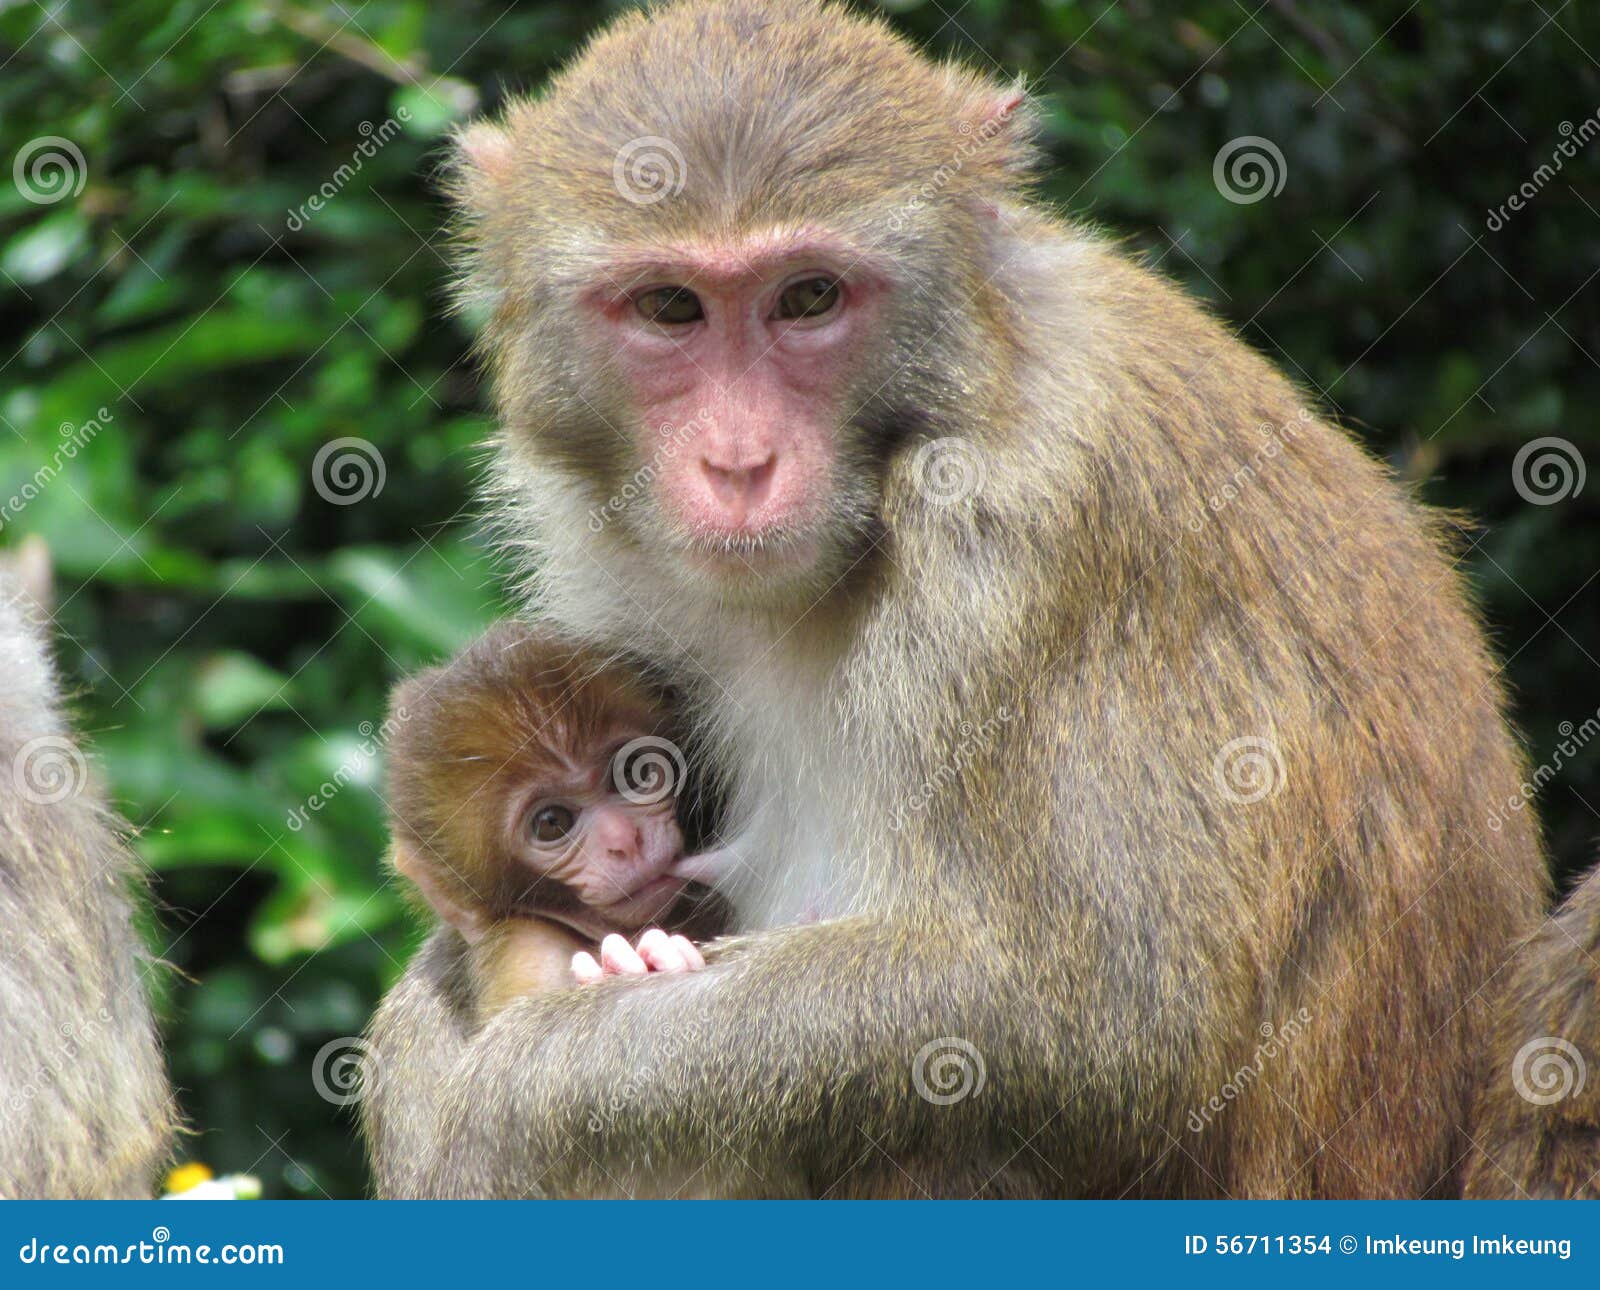 monkey mam feeding a baby